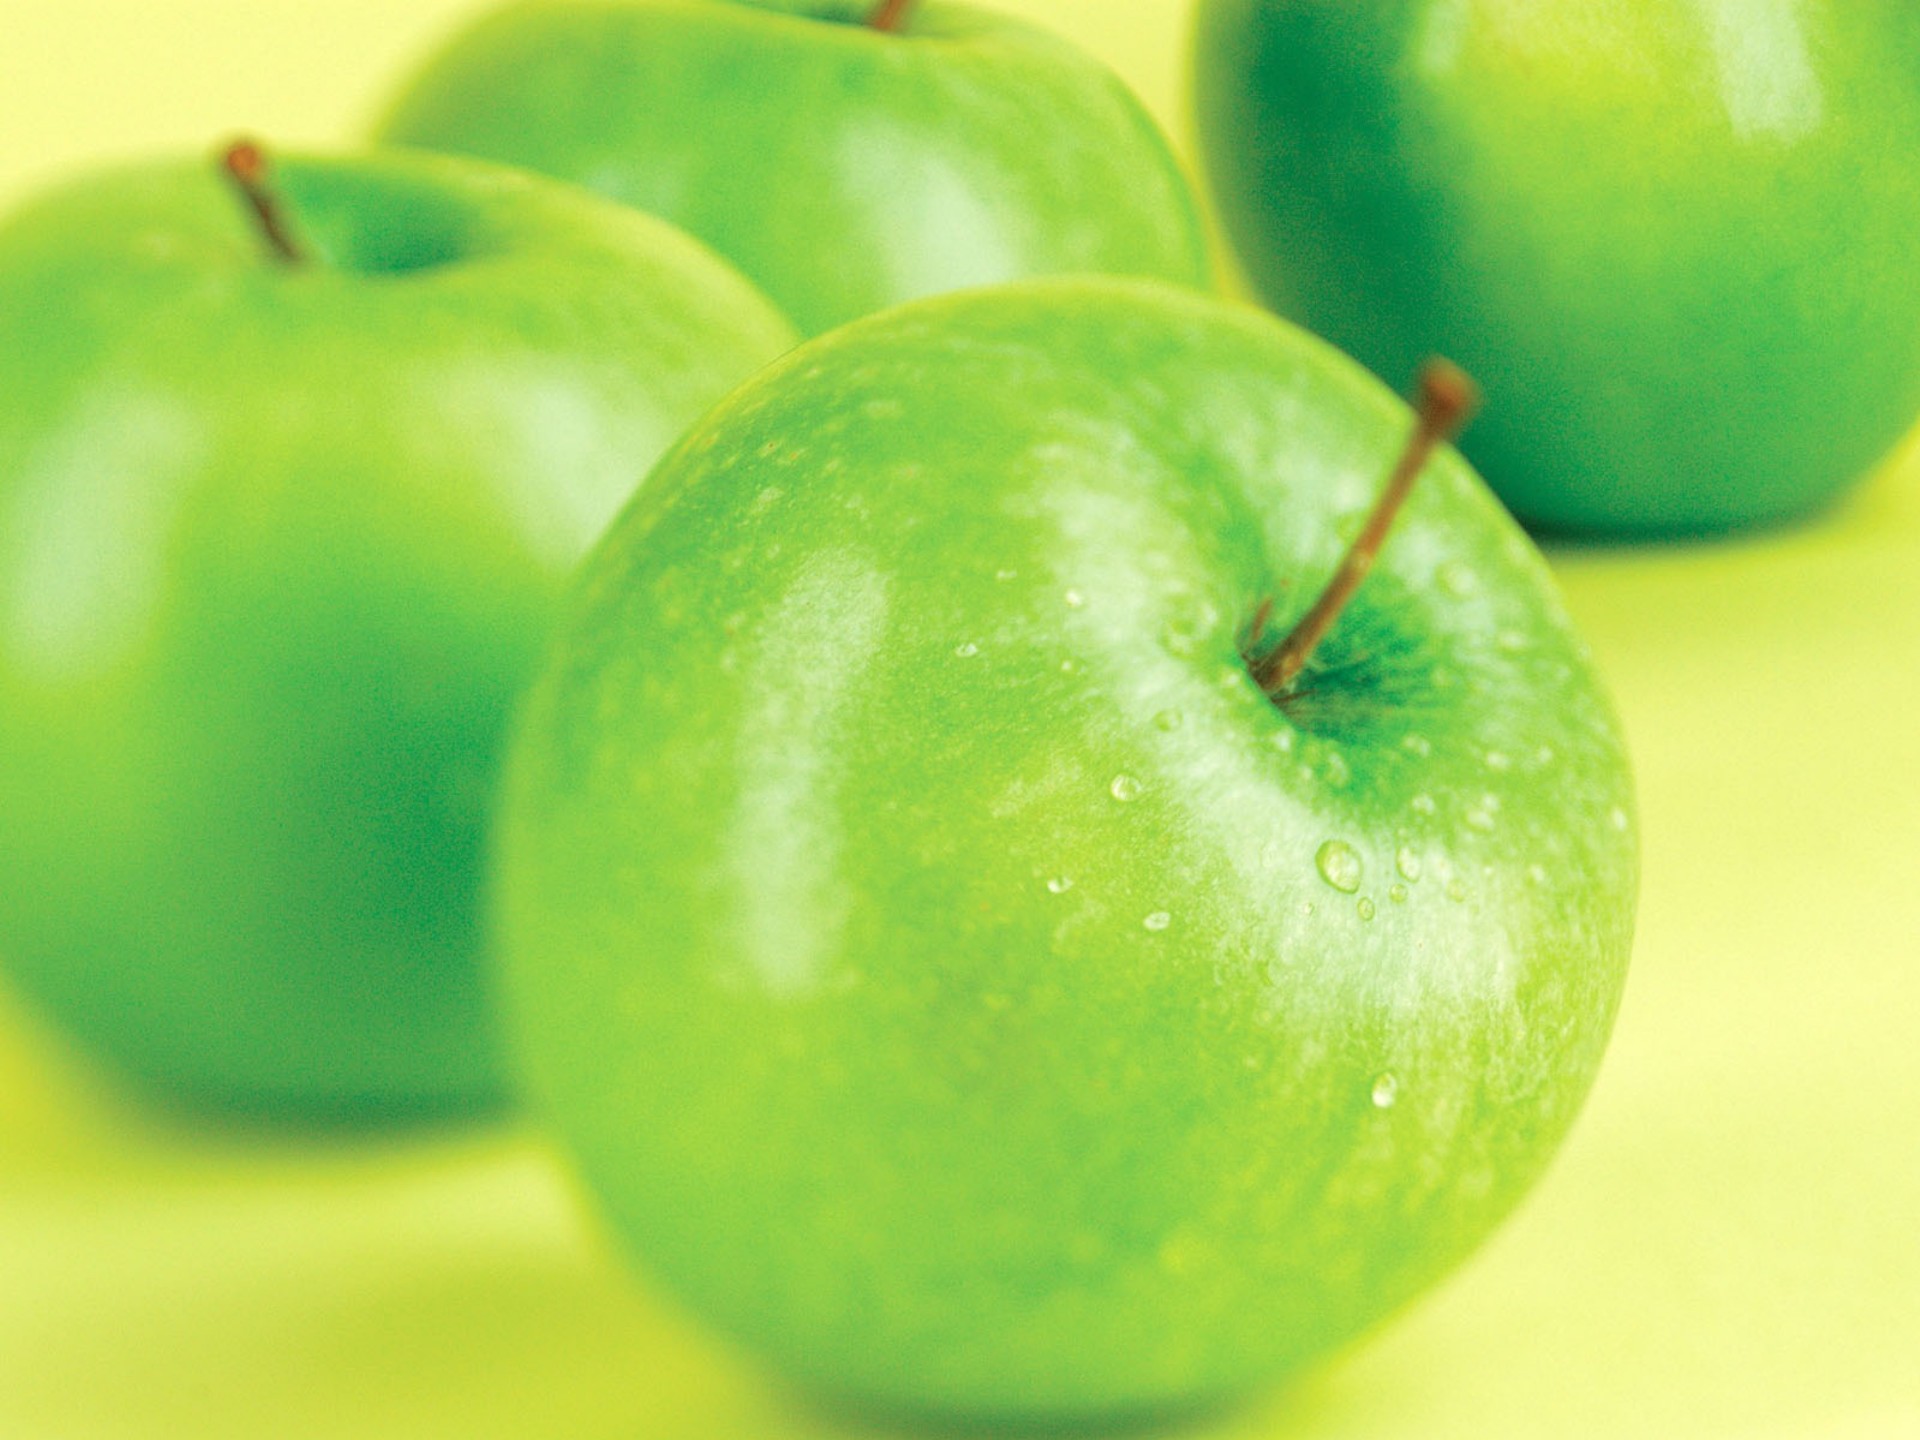 Saham Gambar Buah-buahan 08 Wallpaper - Green Apple Background - HD Wallpaper 